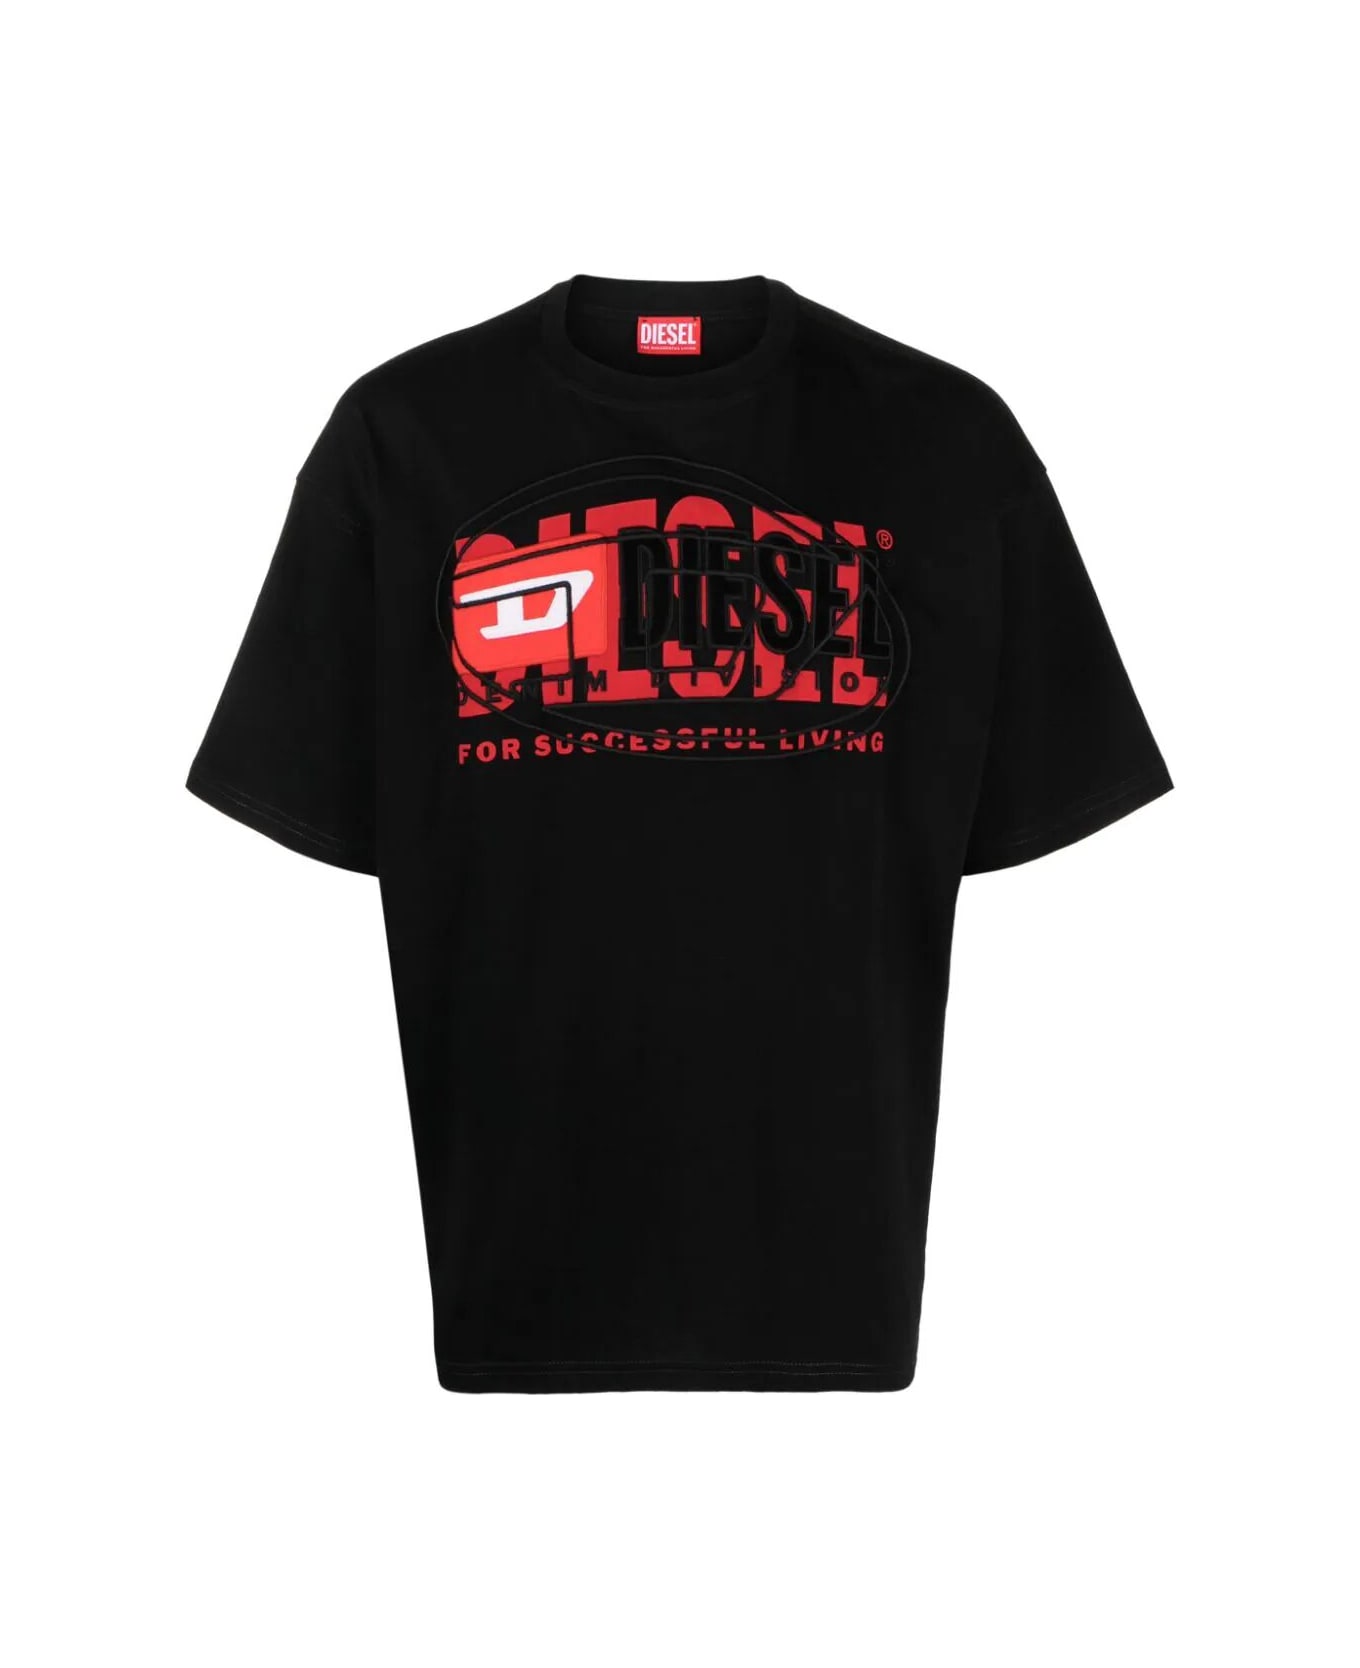 Diesel Boxt T-shirt - Xx Black